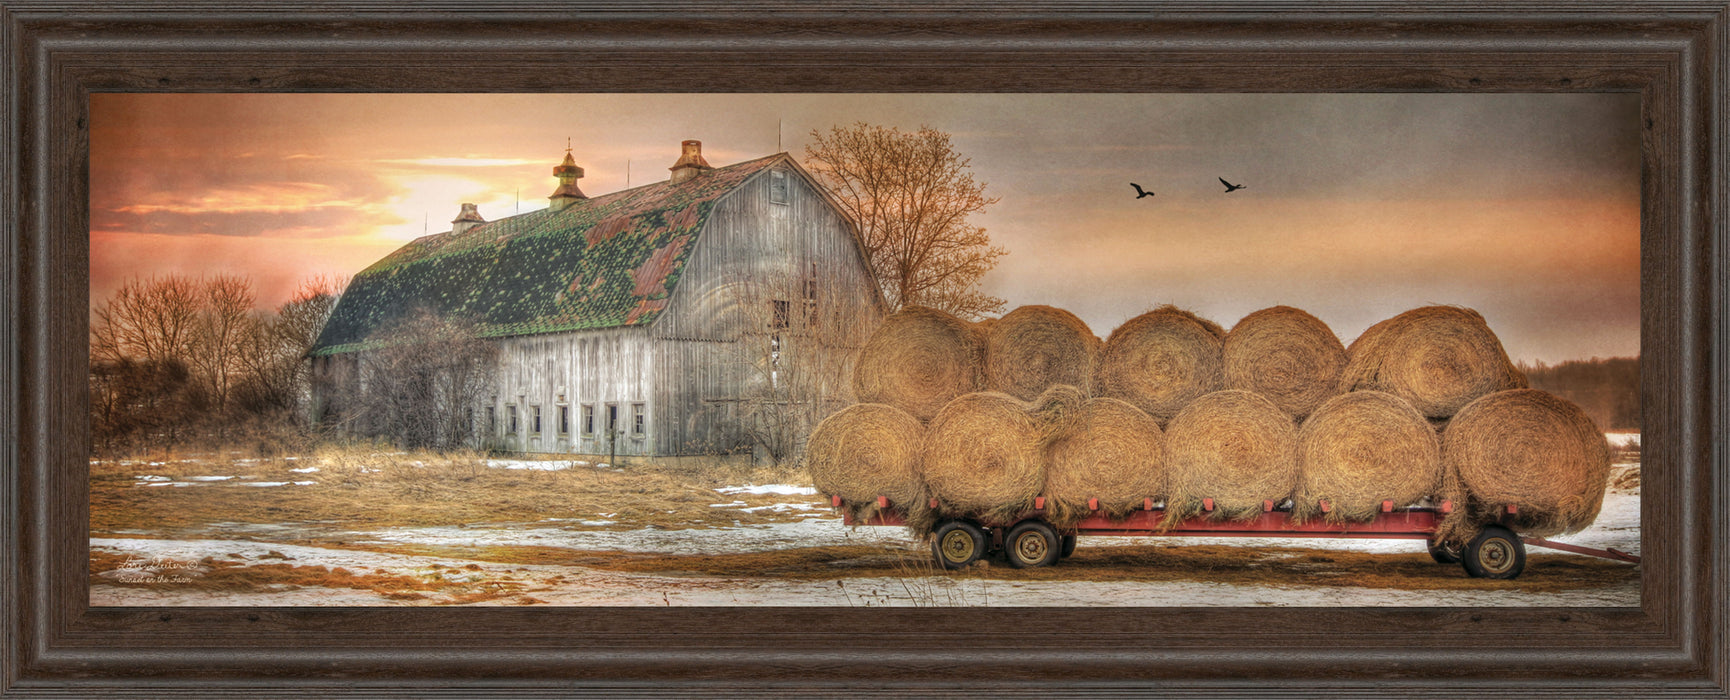 Sunset On The Farm By Lori Dieter - Framed Print Wall Art - Dark Brown